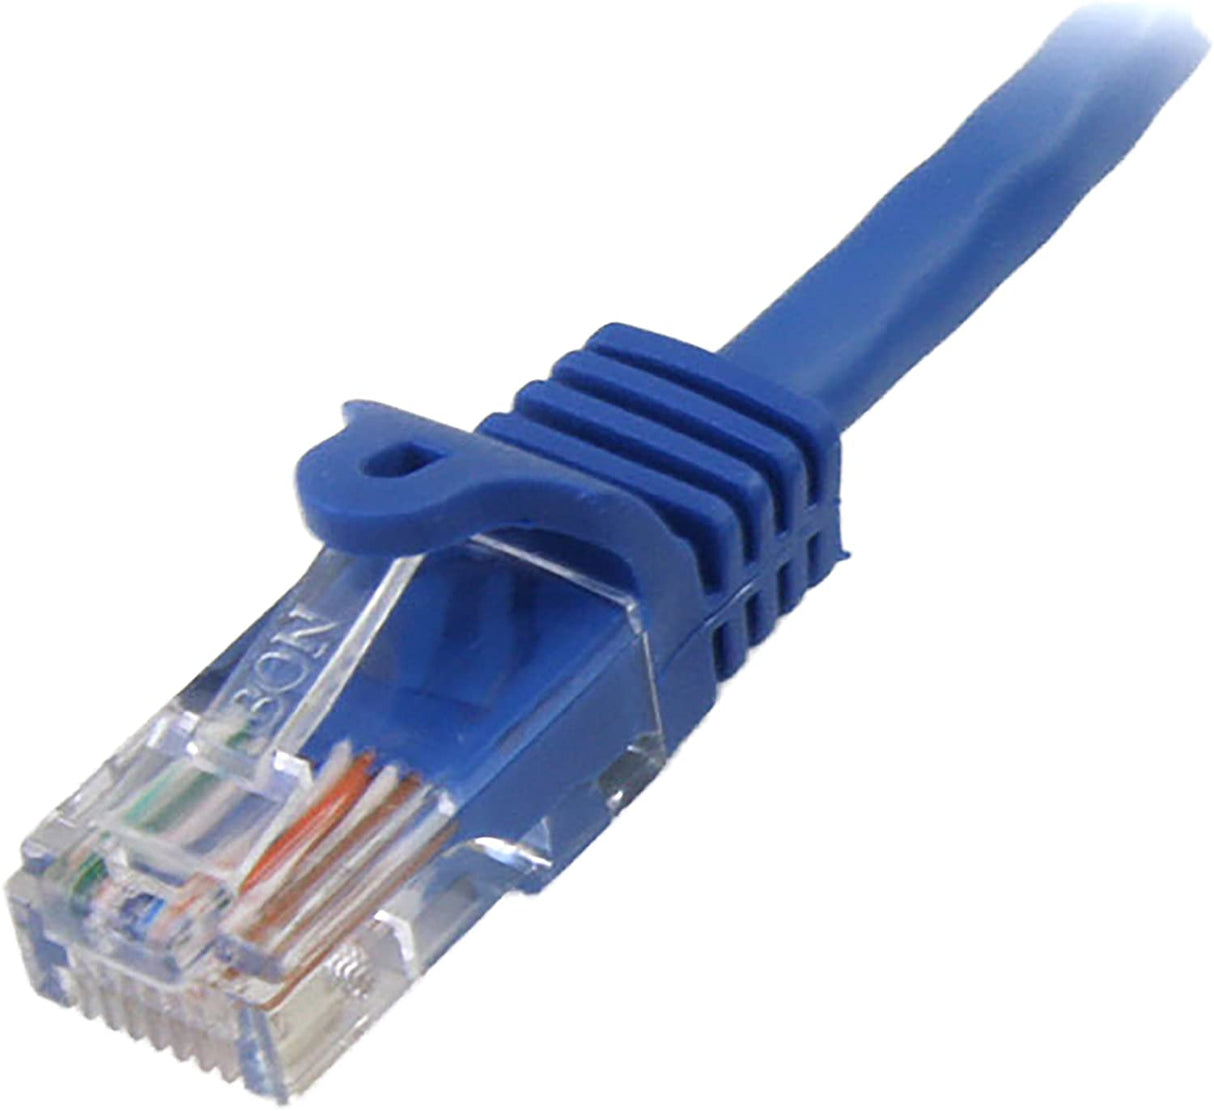 StarTech.com Cat5e Ethernet Cable1 ft - Blue - Patch Cable - Snagless Cat5e Cable - Short Network Cable - Ethernet Cord - Cat 5e Cable - 1ft (RJ45PATCH1) 1 ft / 30cm Blue